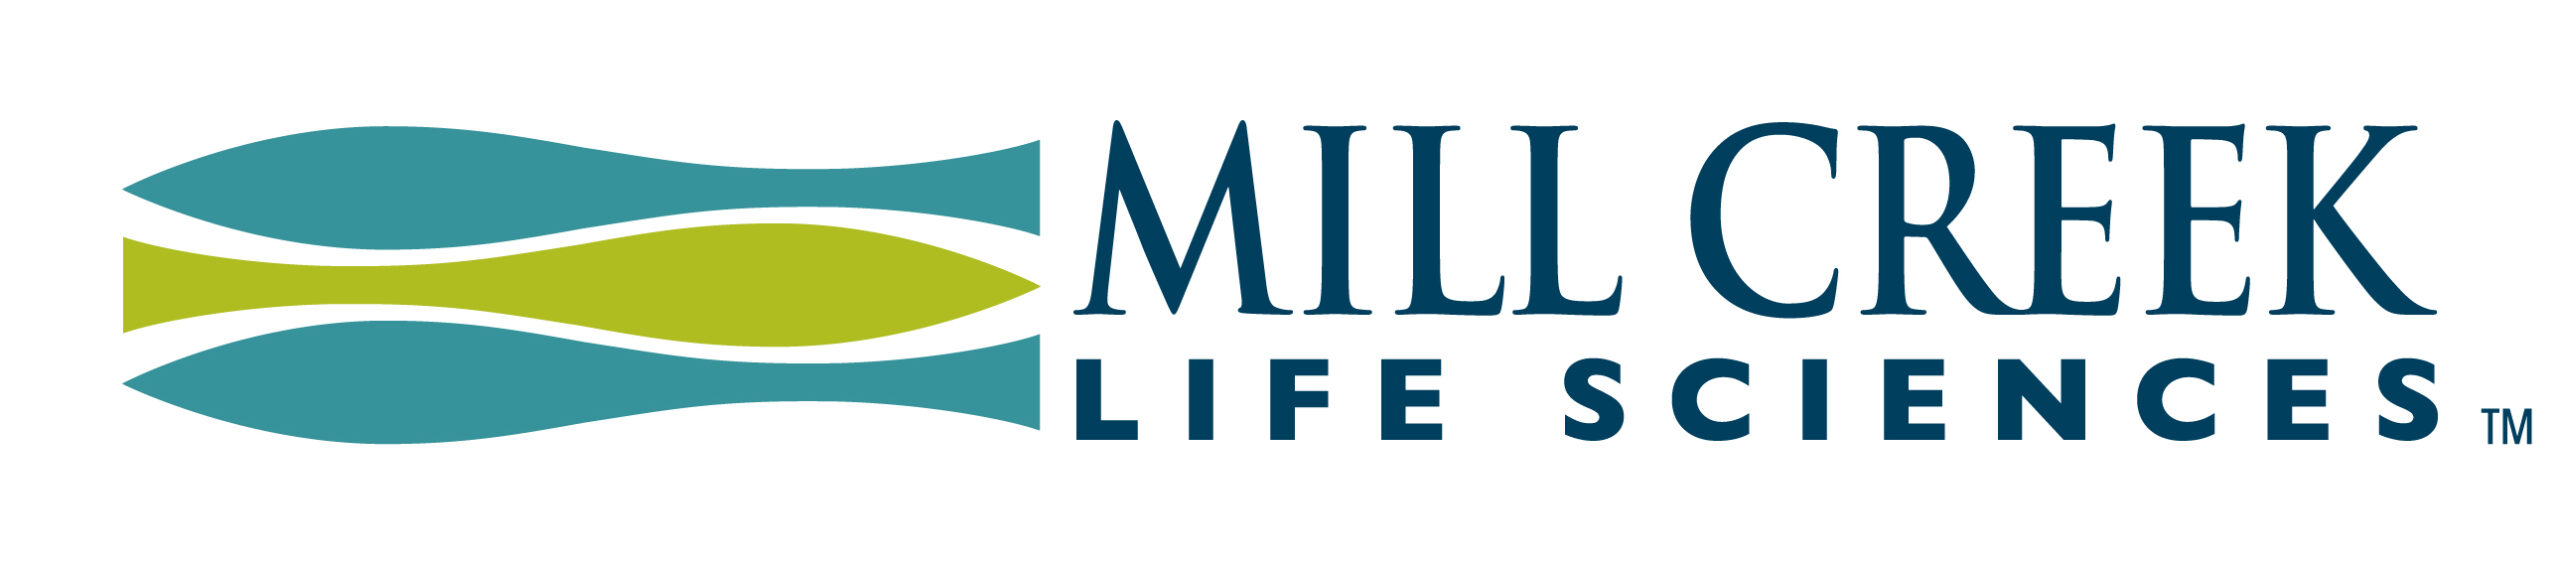 Mill Creek Life Sciences